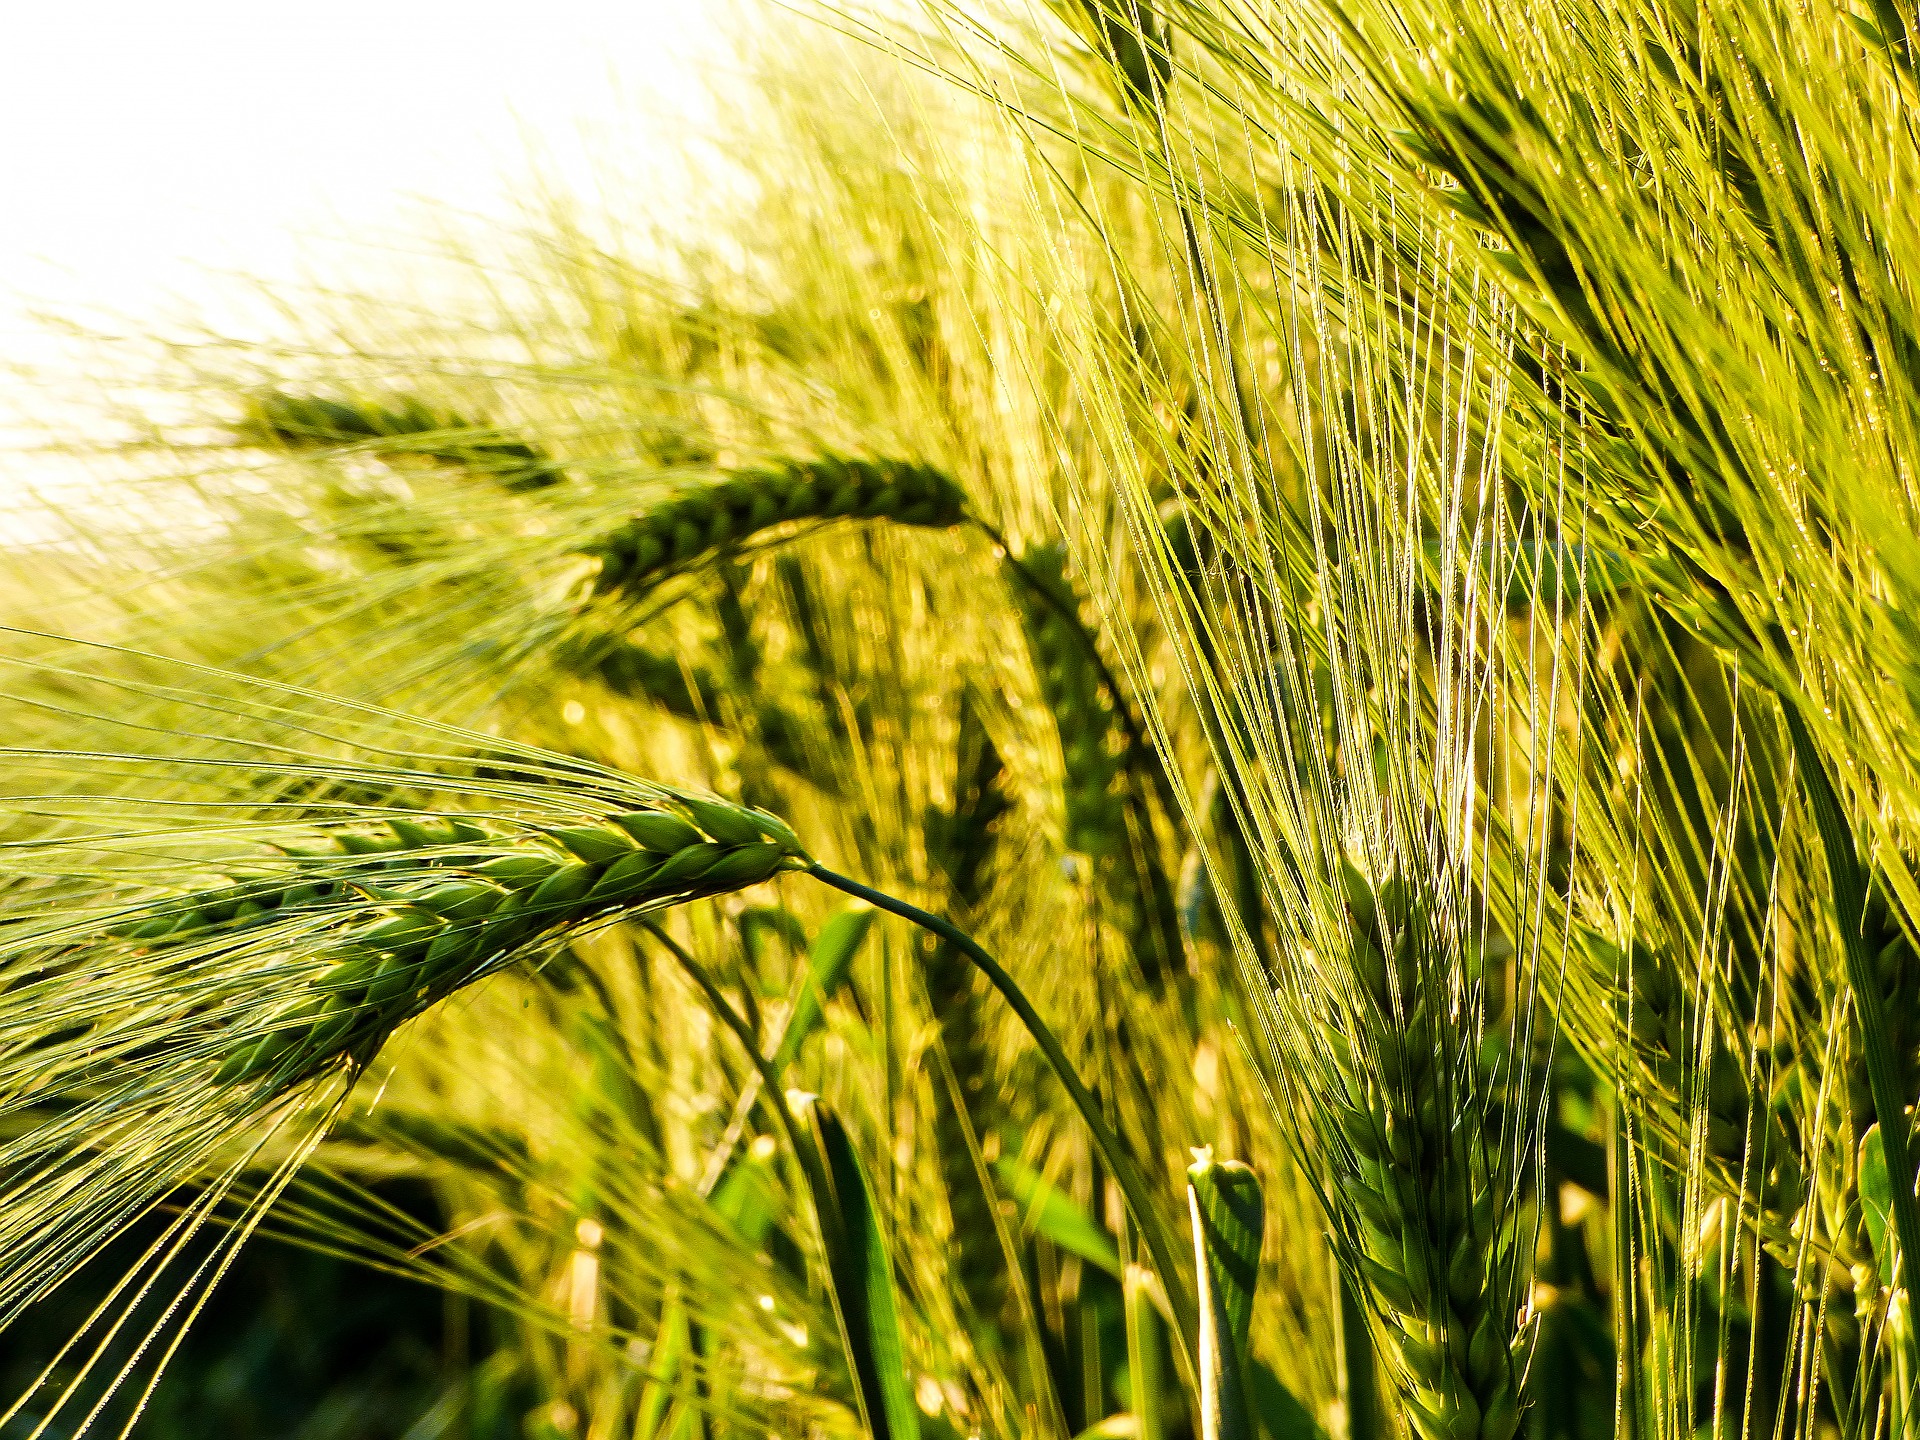 wheat field photo for gmo resource